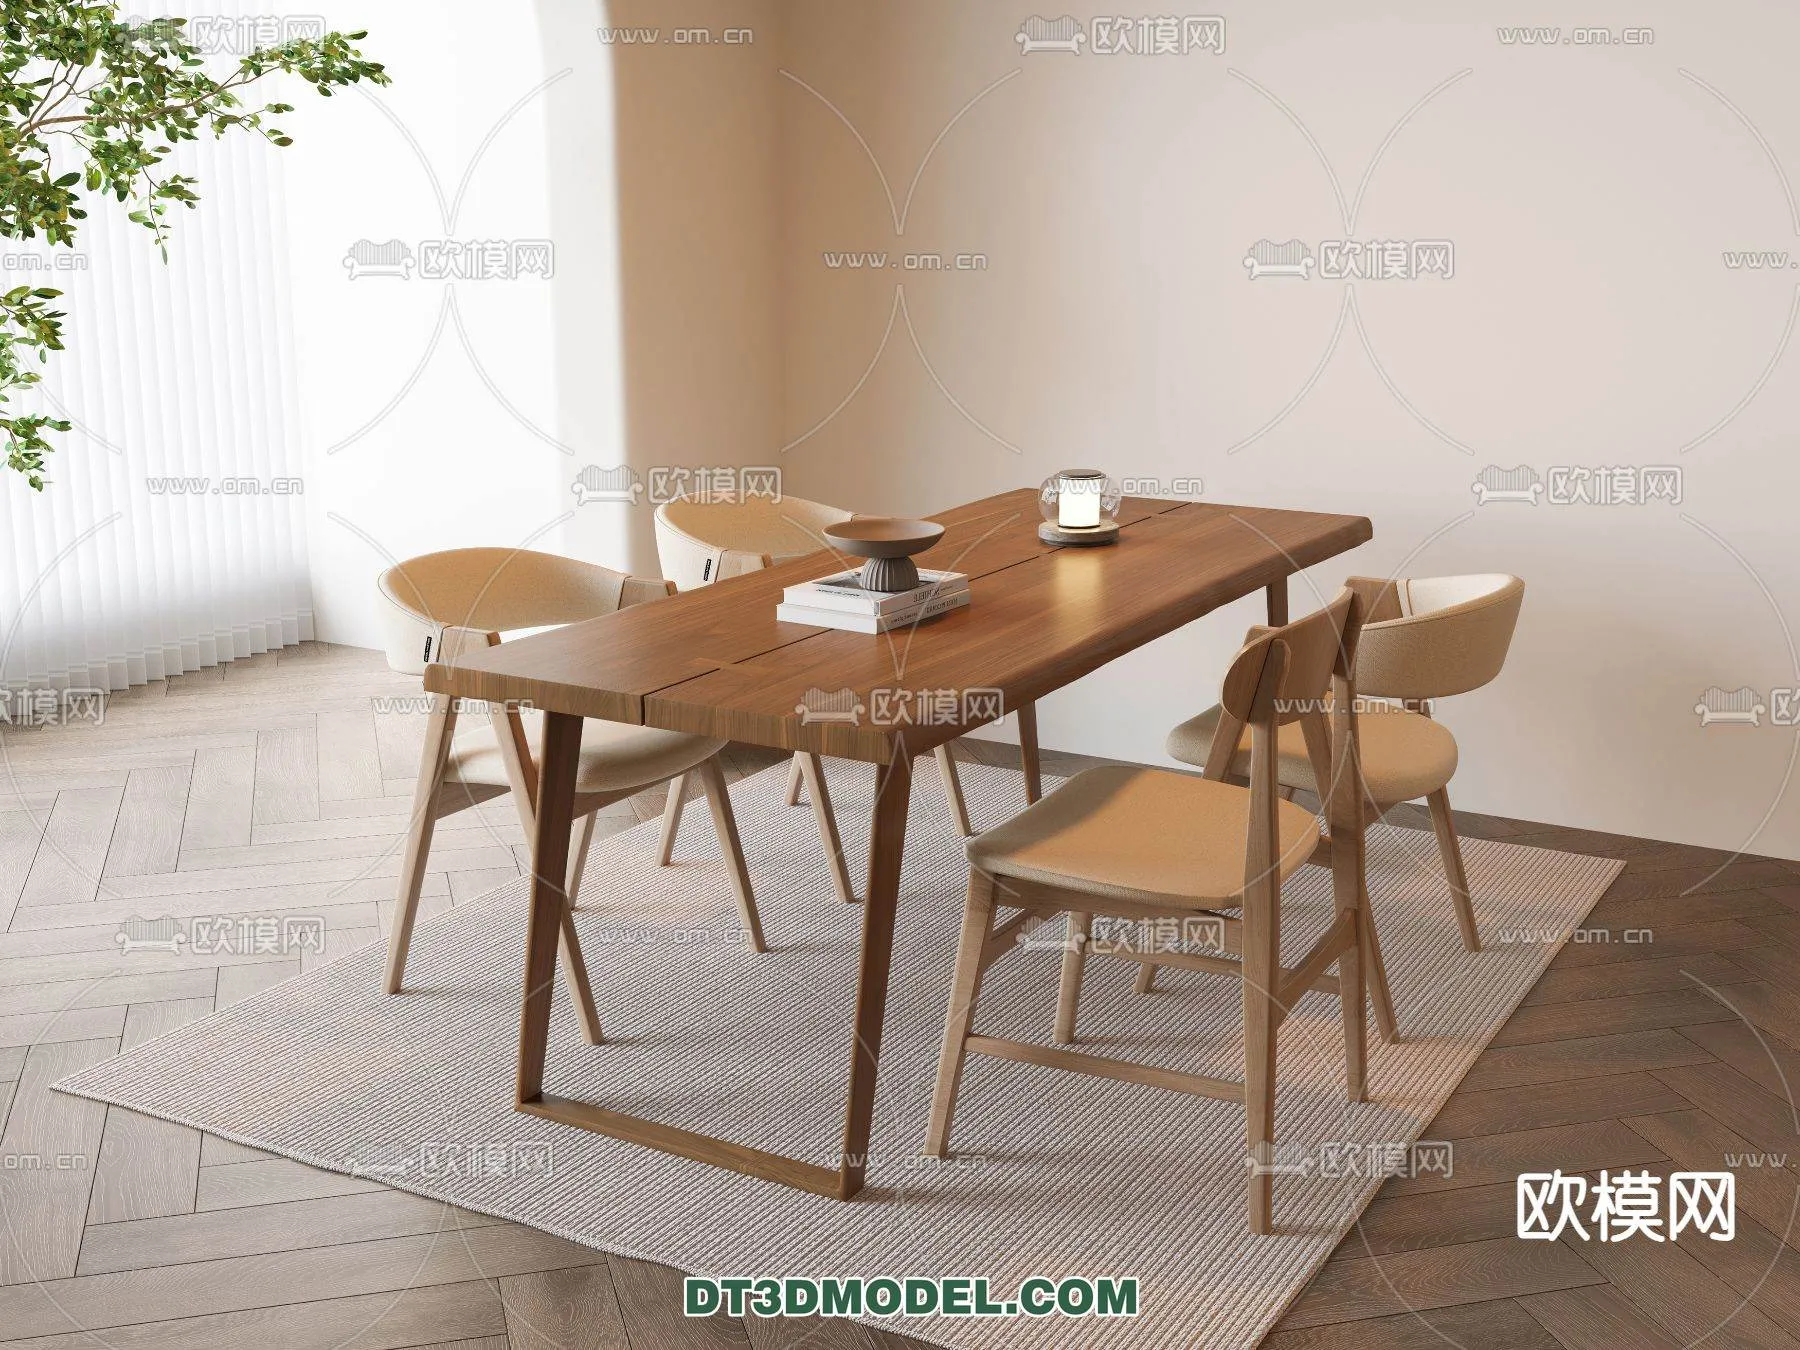 WABI SABI STYLE 3D MODELS – DINING TABLE – 0128